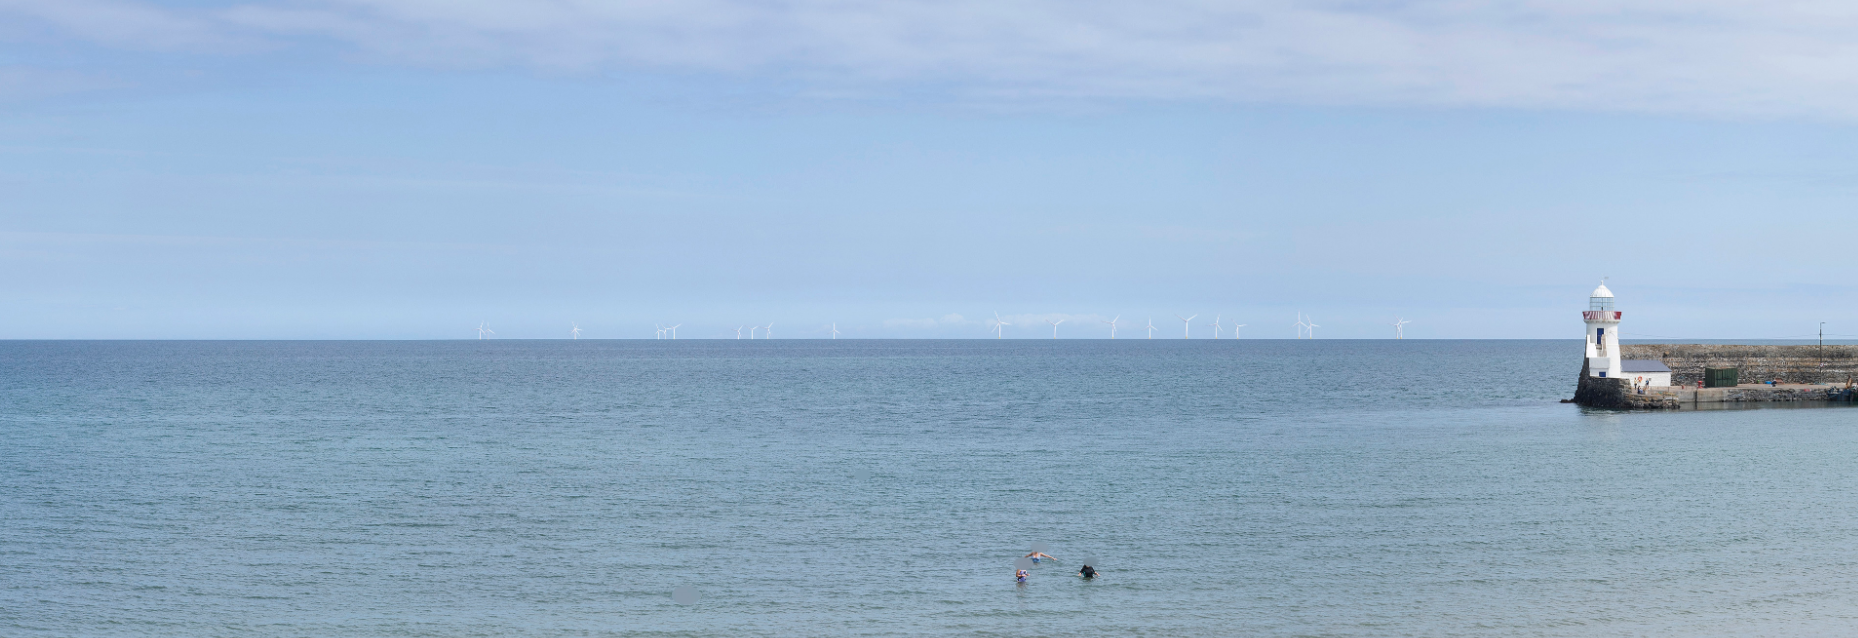 Renewables Powerhouse Making Offshore Wind Comeback